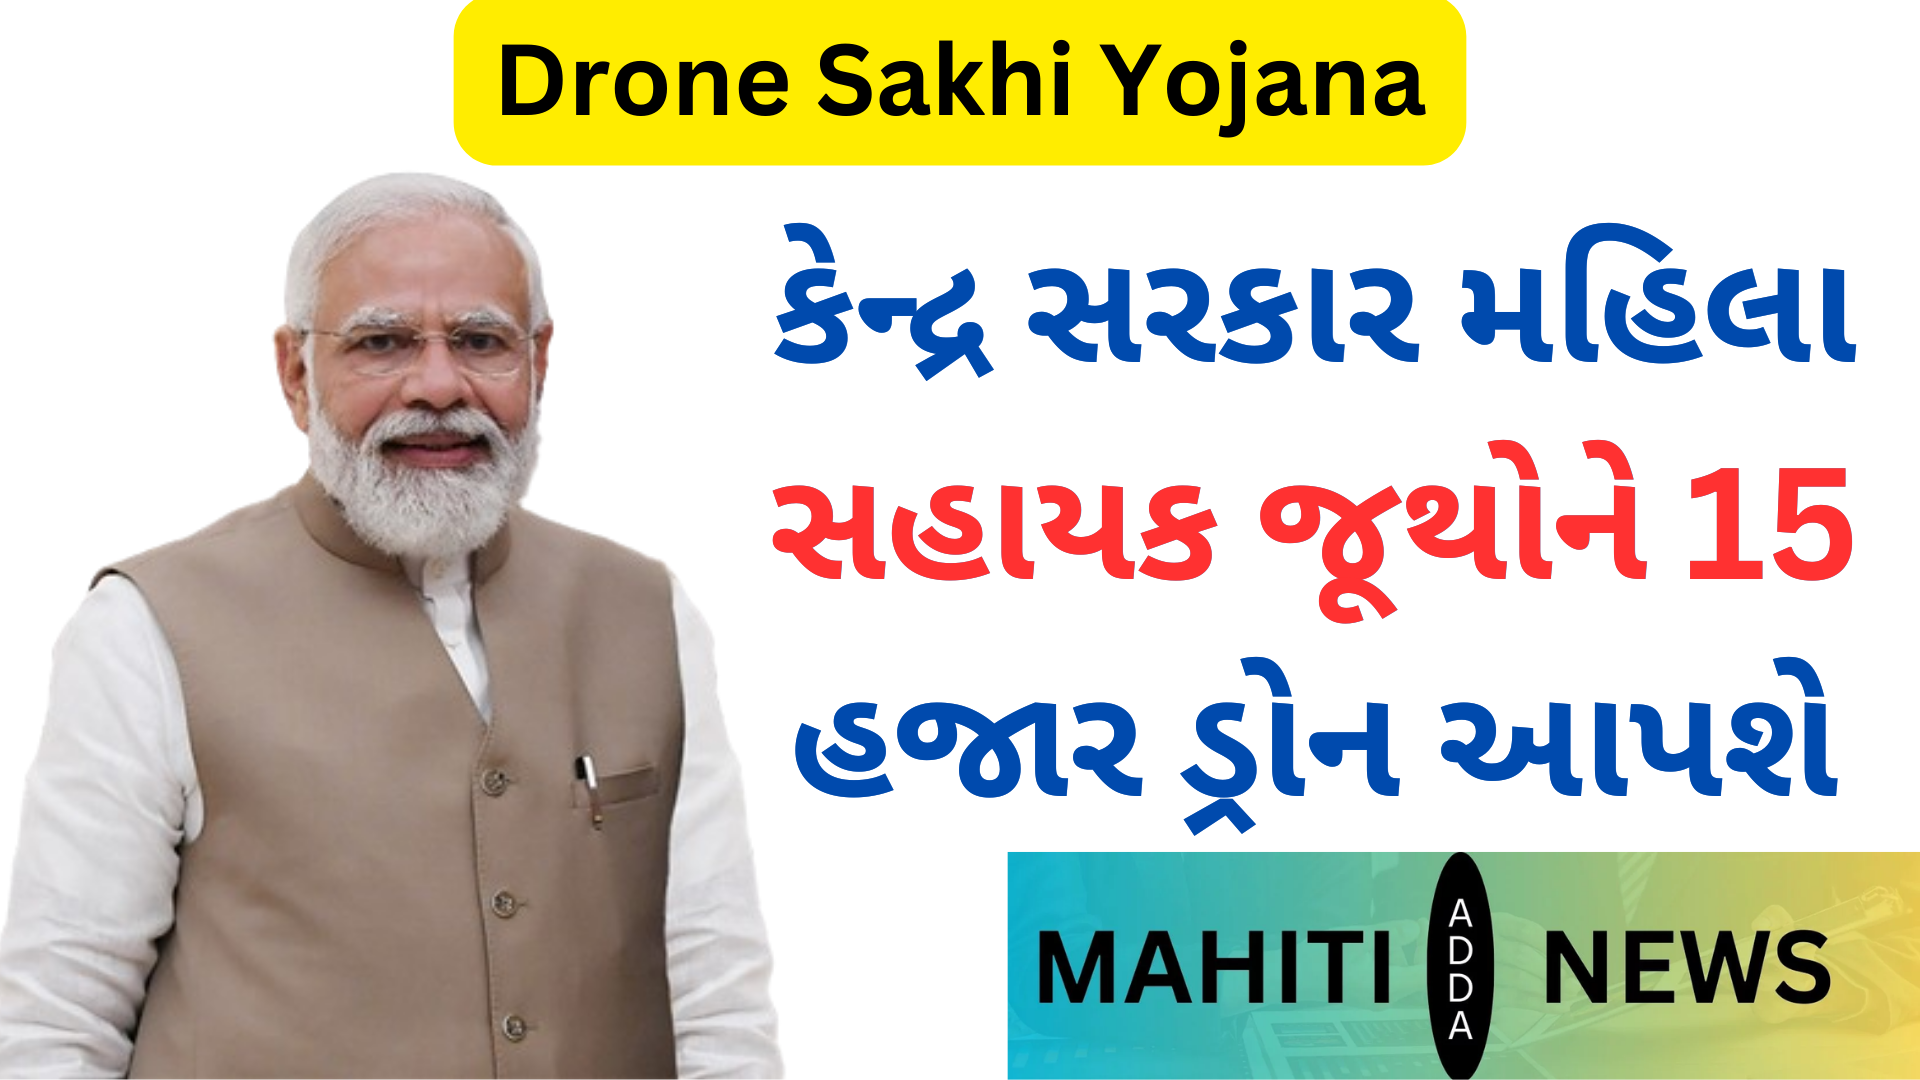 Drone Sakhi Yojana